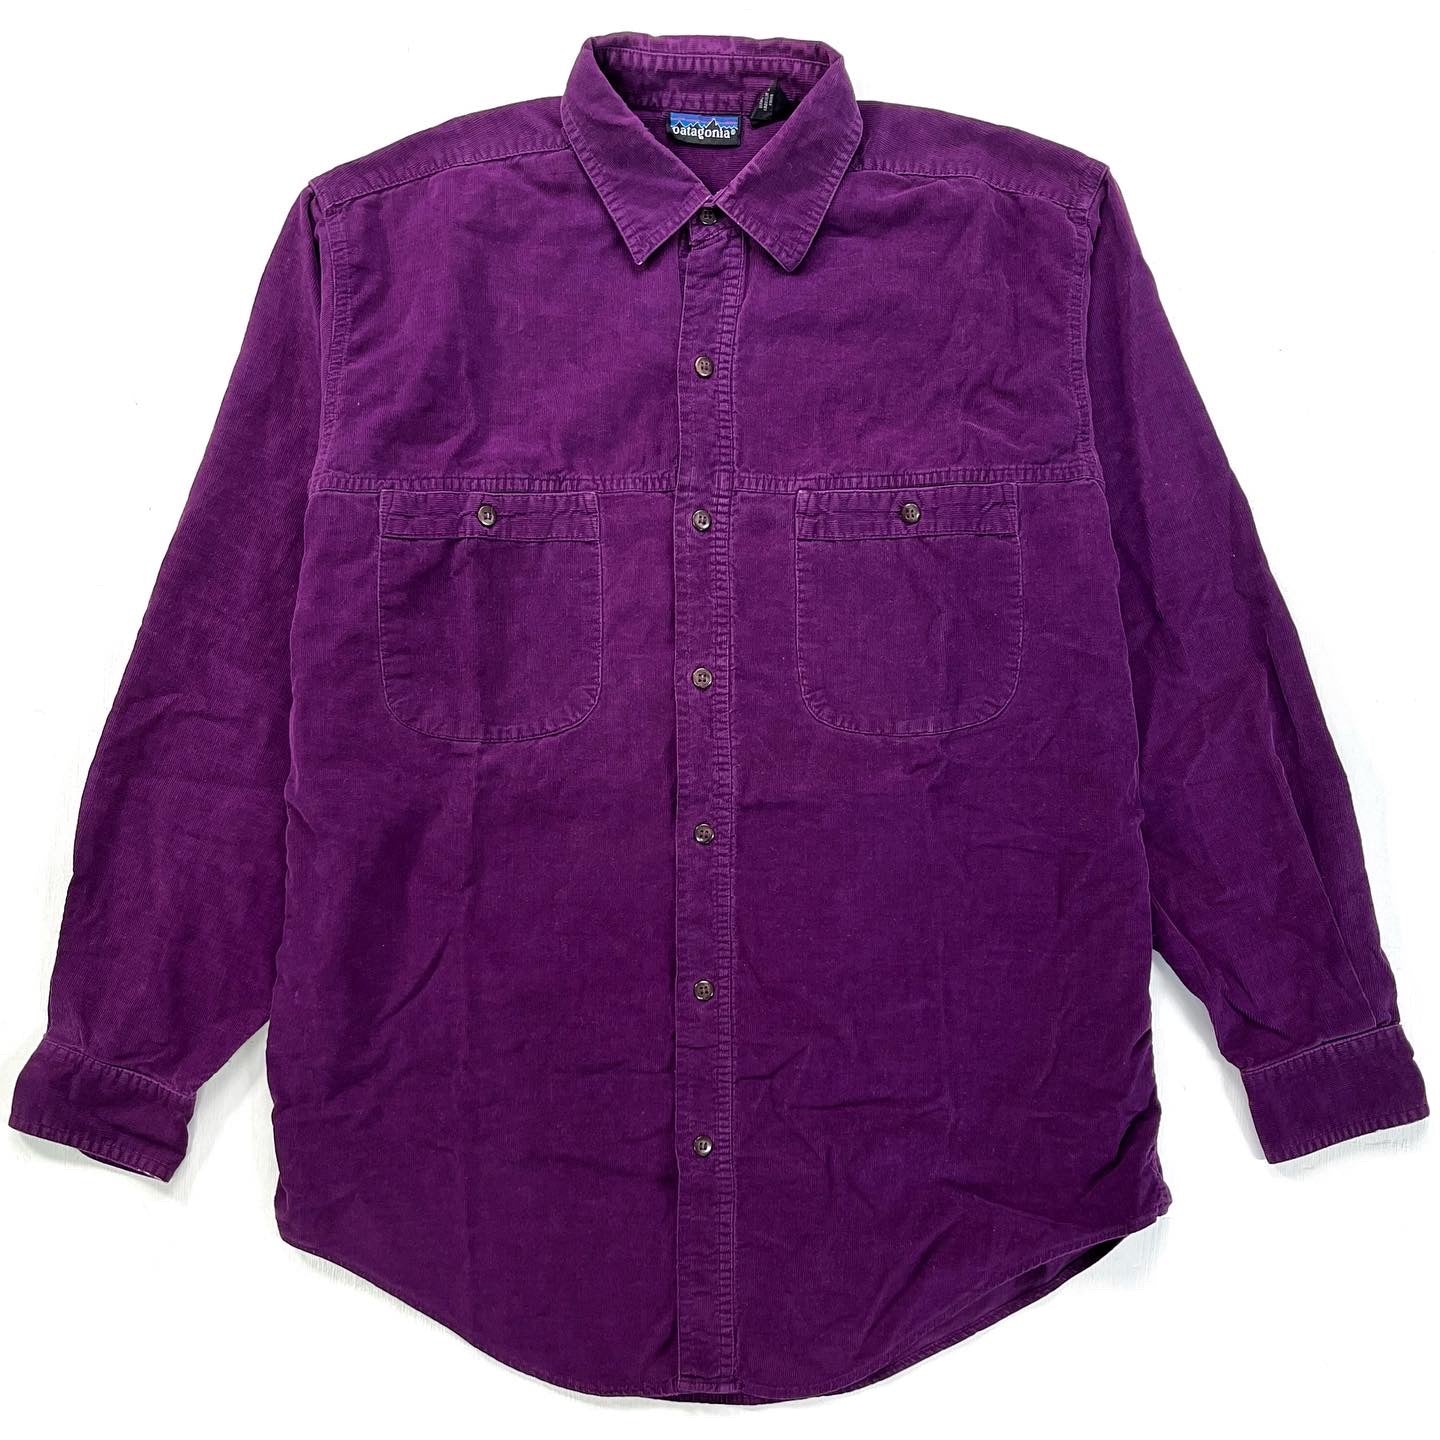 1991 Patagonia Lightweight Cotton Corduroy Shirt, Deep Plum (M)